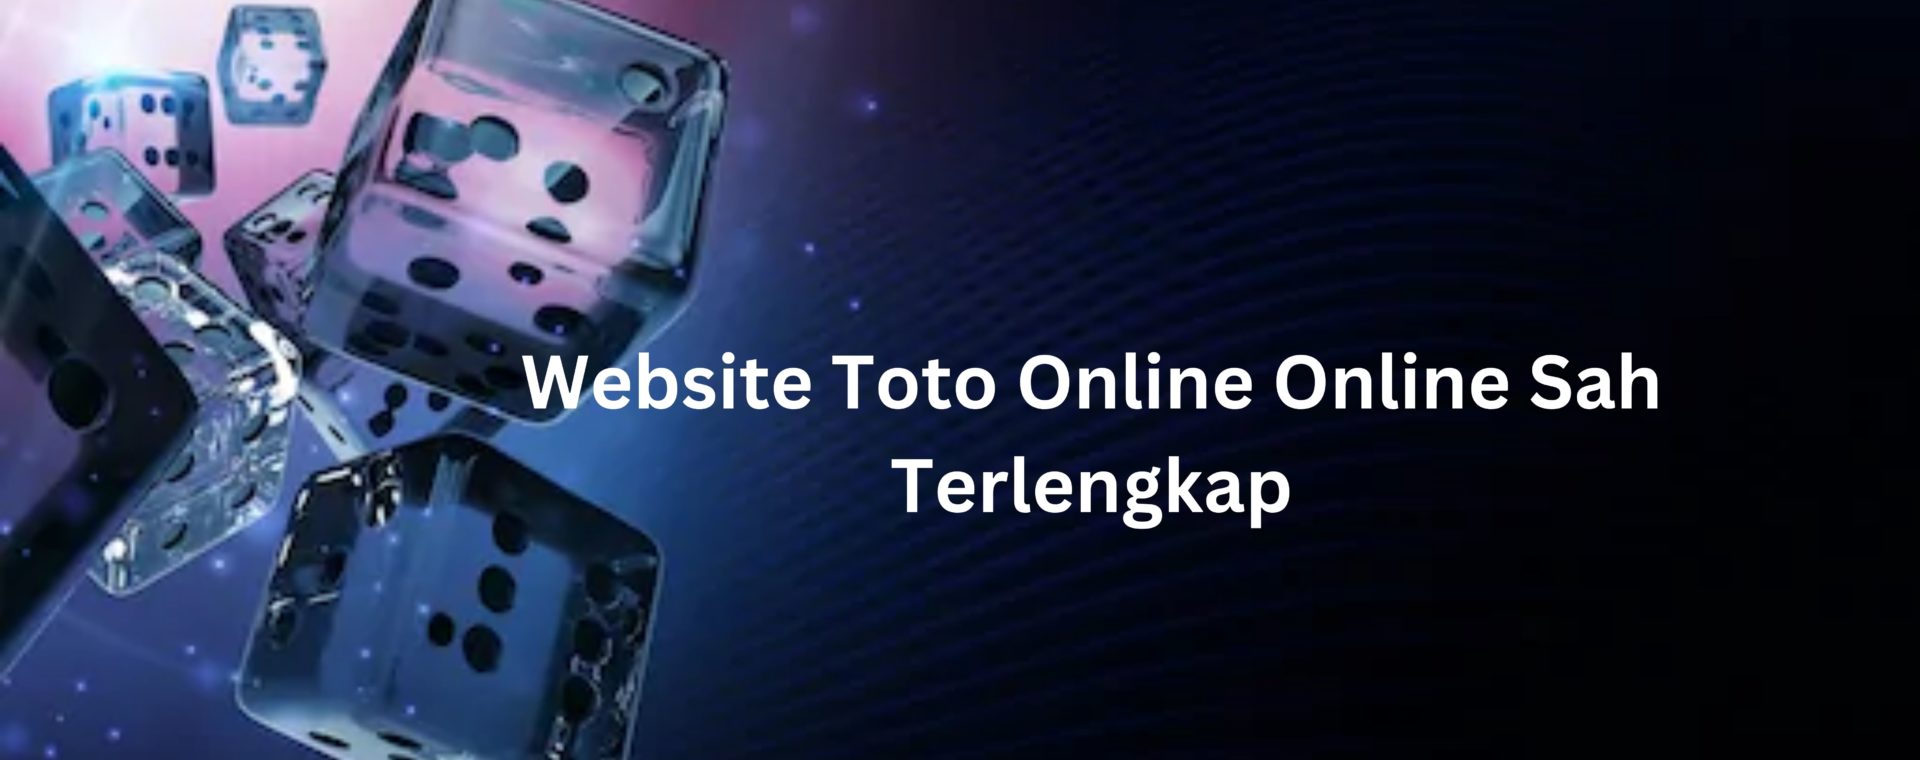 Website Toto Online Online Sah Terlengkap